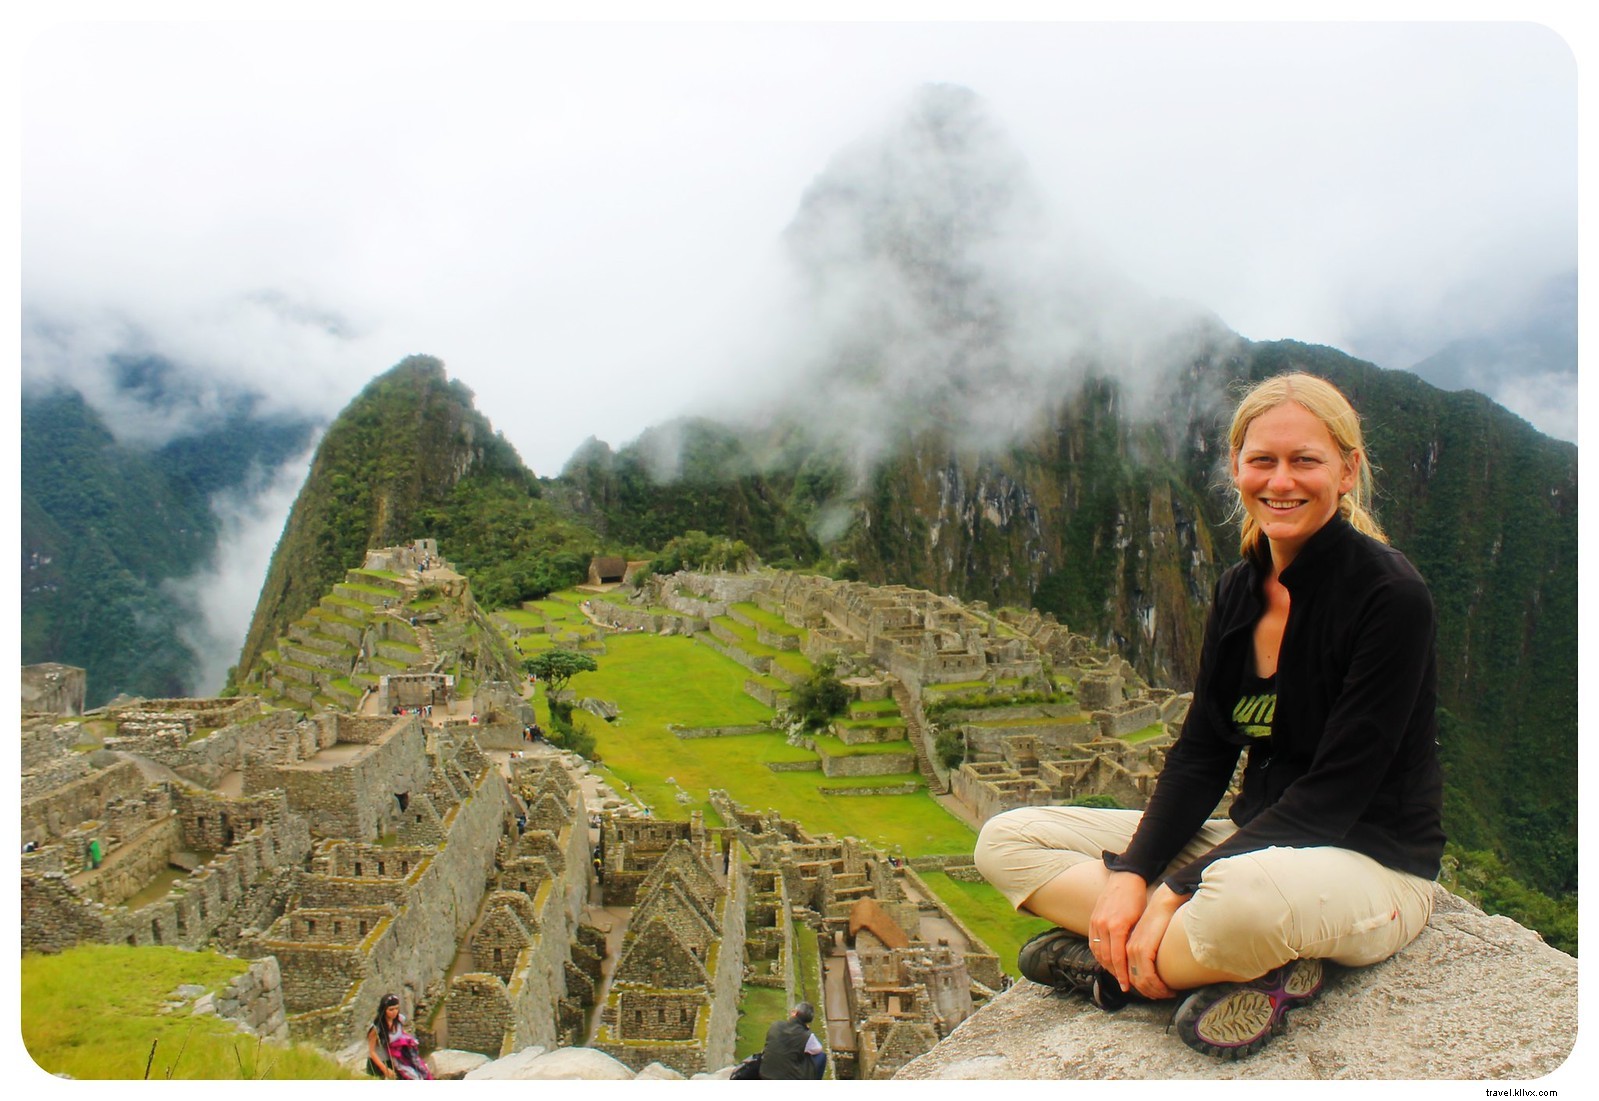 Lima negara aman untuk solo traveler wanita